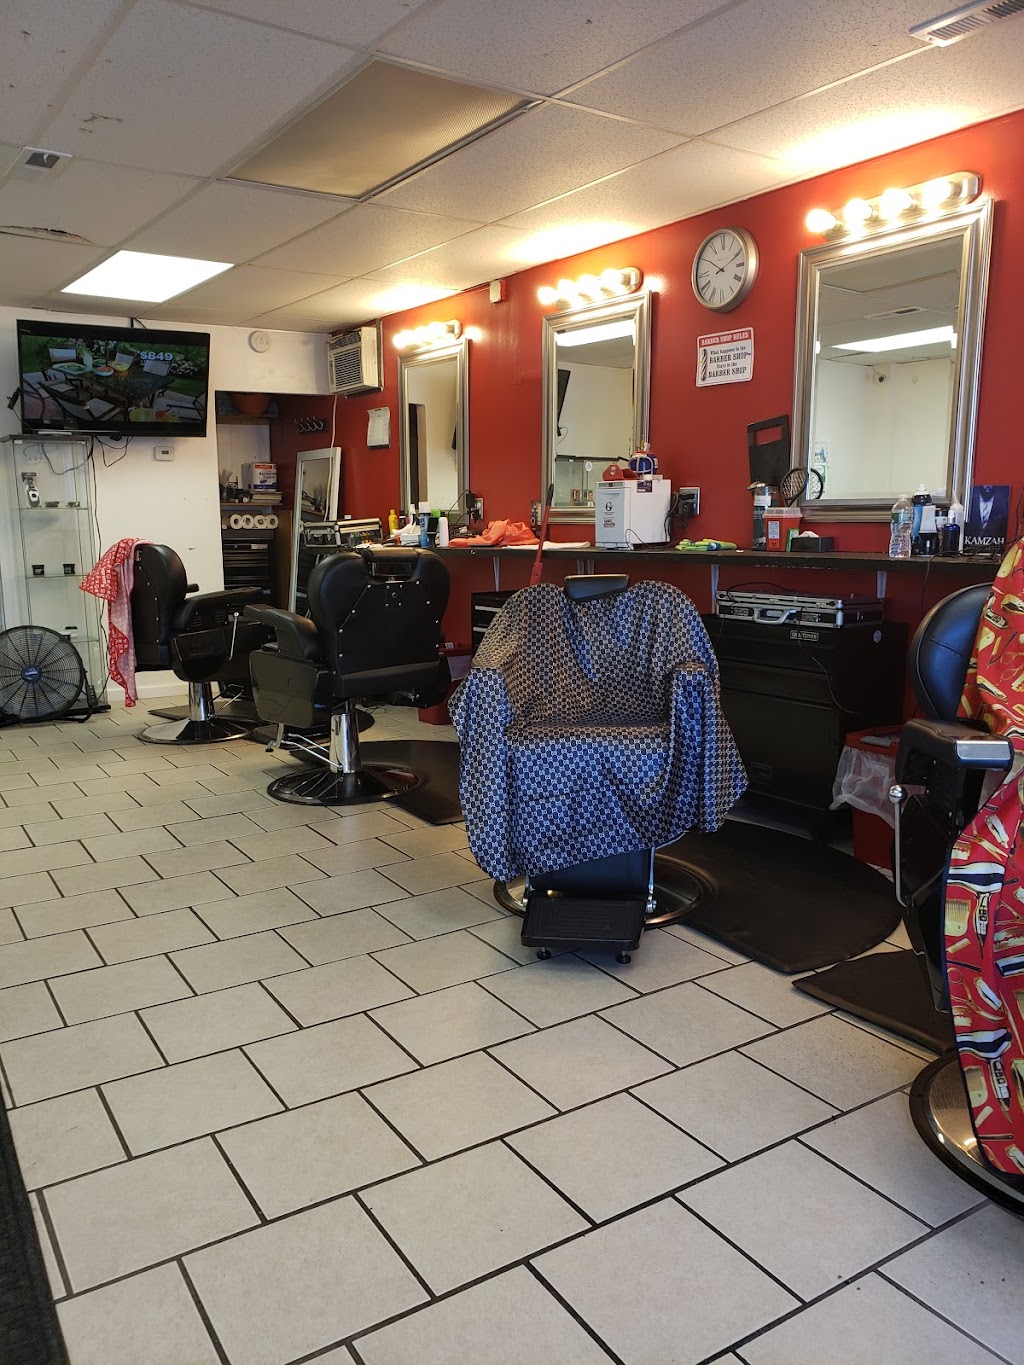 G Shop Barbering & Grooming | 1305 E Main St APT A, Waterbury, CT 06705 | Phone: (203) 527-5123